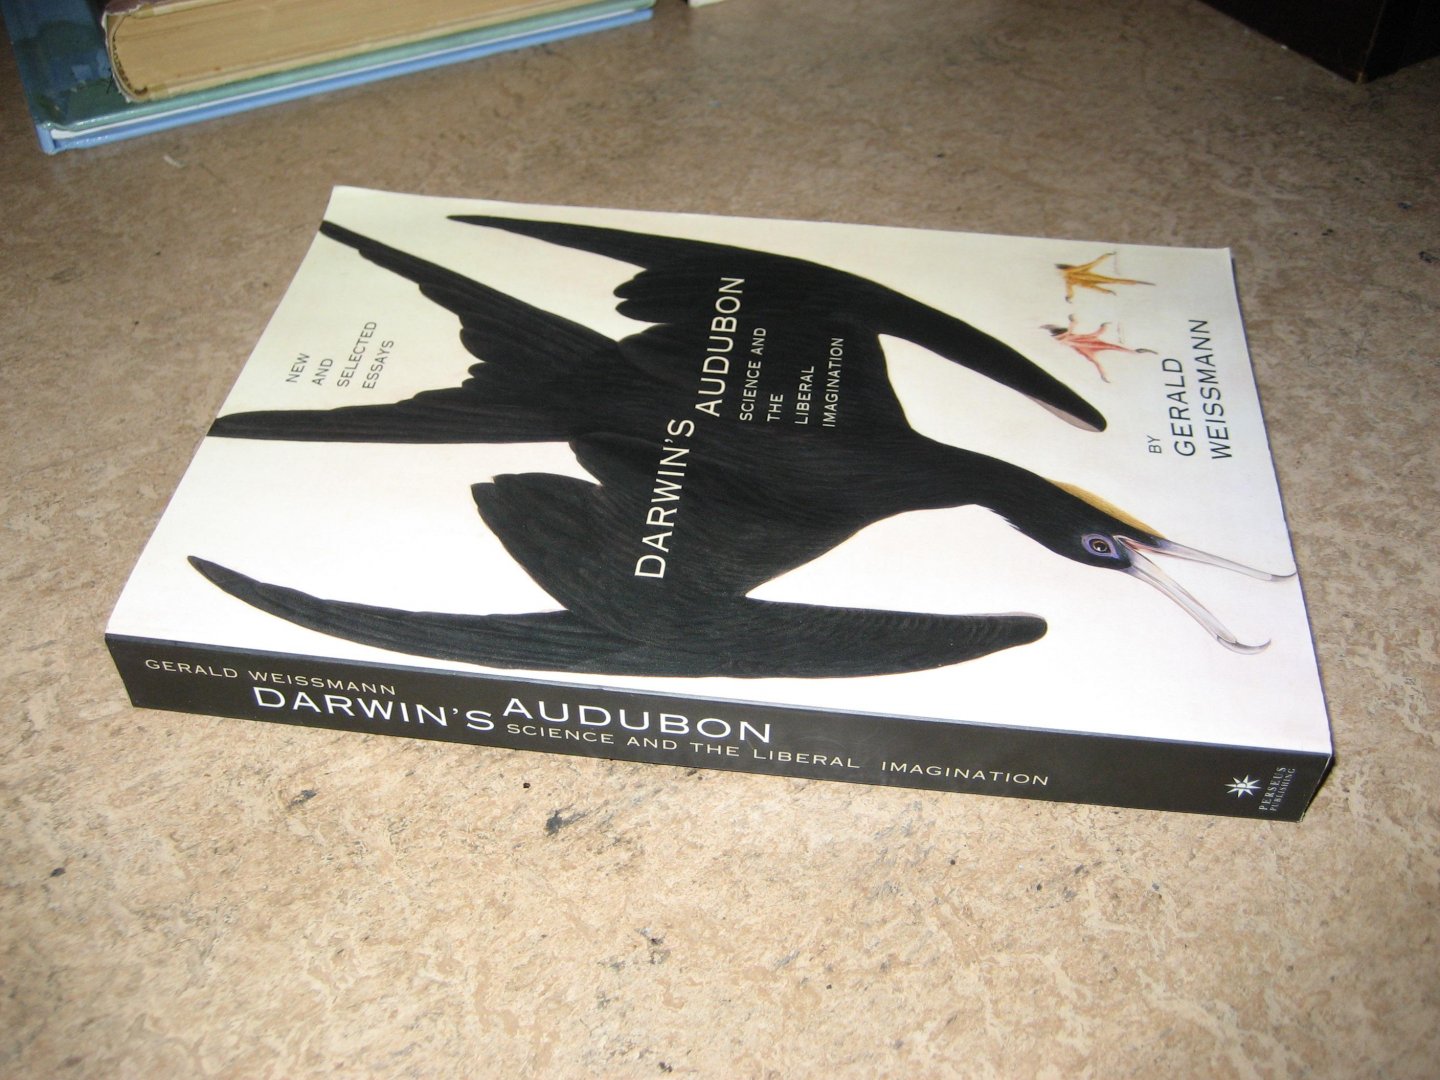 Weissmann, Gerald - Darwin's Audubon. Science and the Liberal Imagination